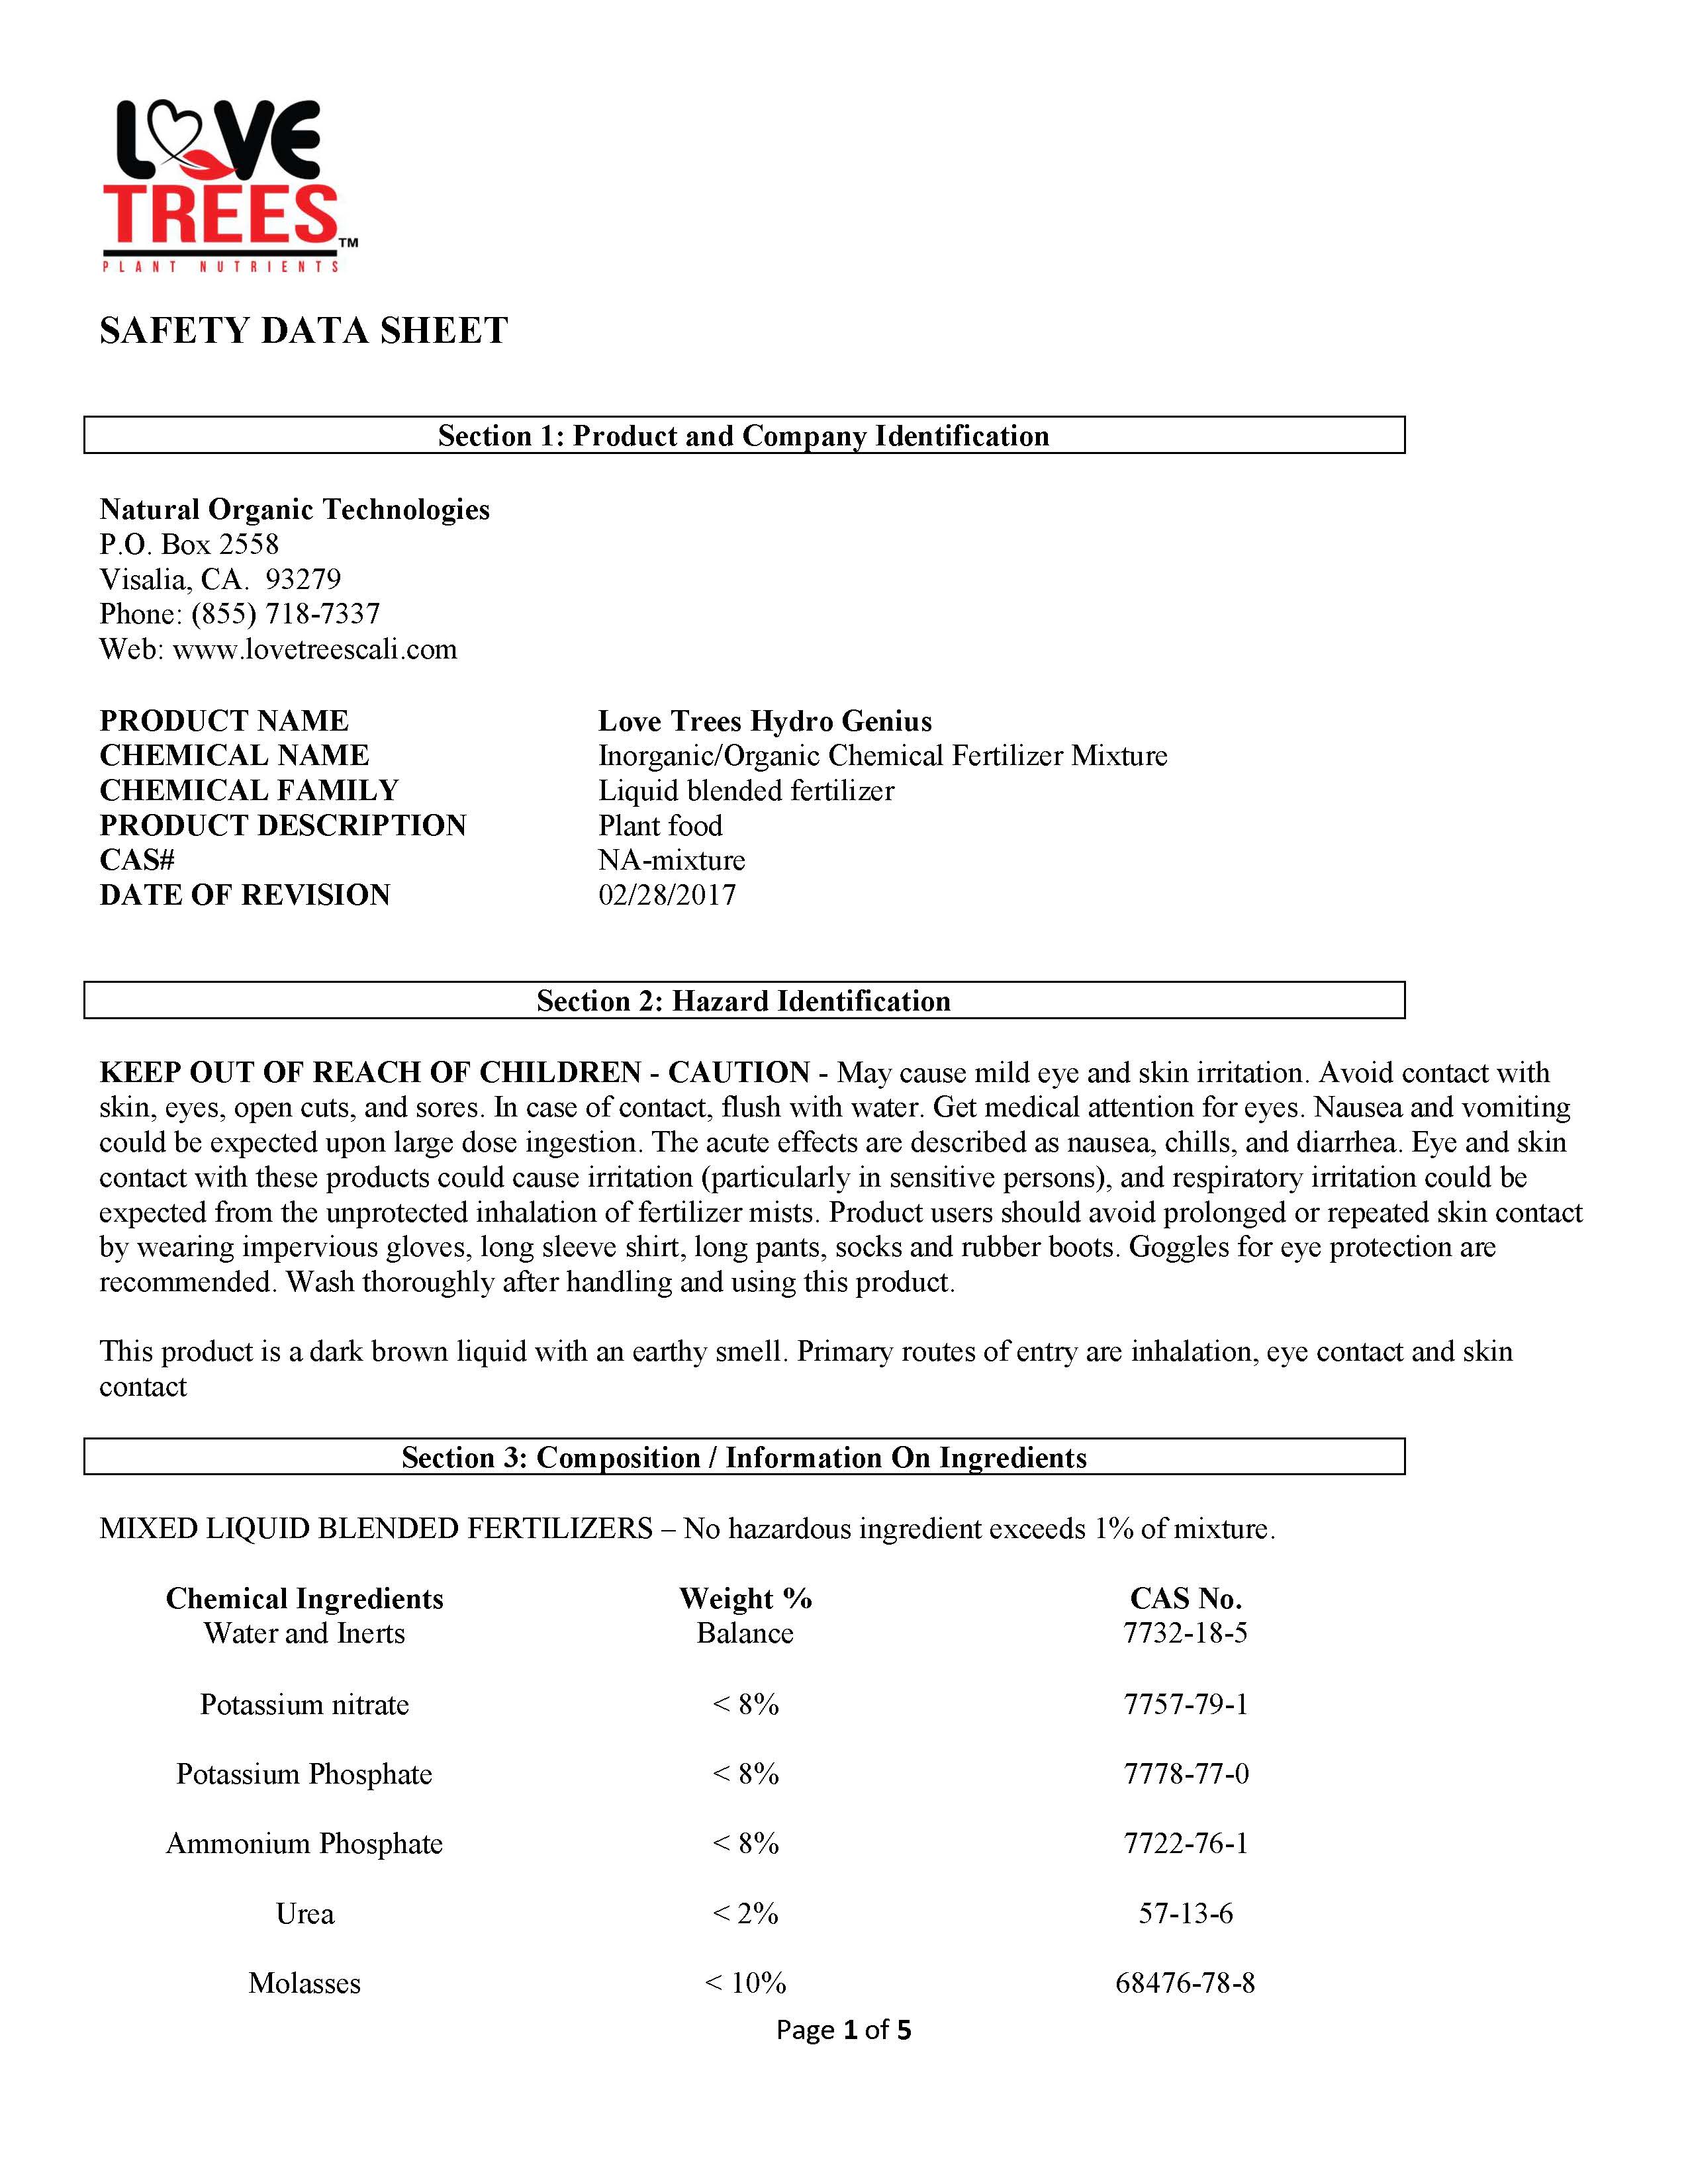 safety-data-sheet.hydrogenius-page-1.jpg